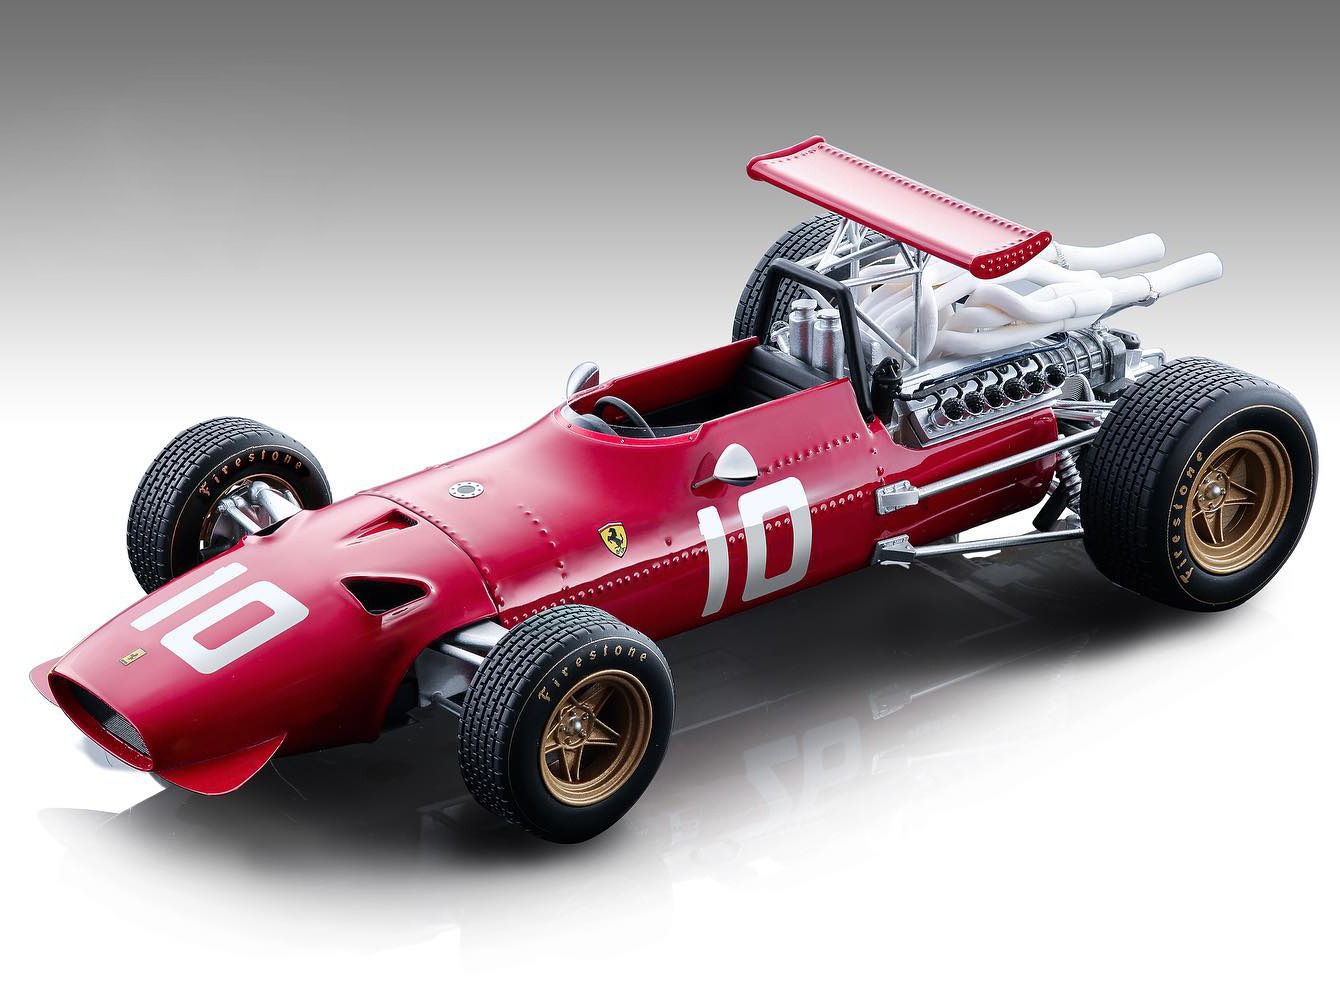 Ferrari 312 F1/68 10 Jacky Ickx Formula One Dutch Grand Prix (1968) "mythos Series" Limited Edition To 155 Pieces Worldwide 1/18 Model Car By Tecnomo